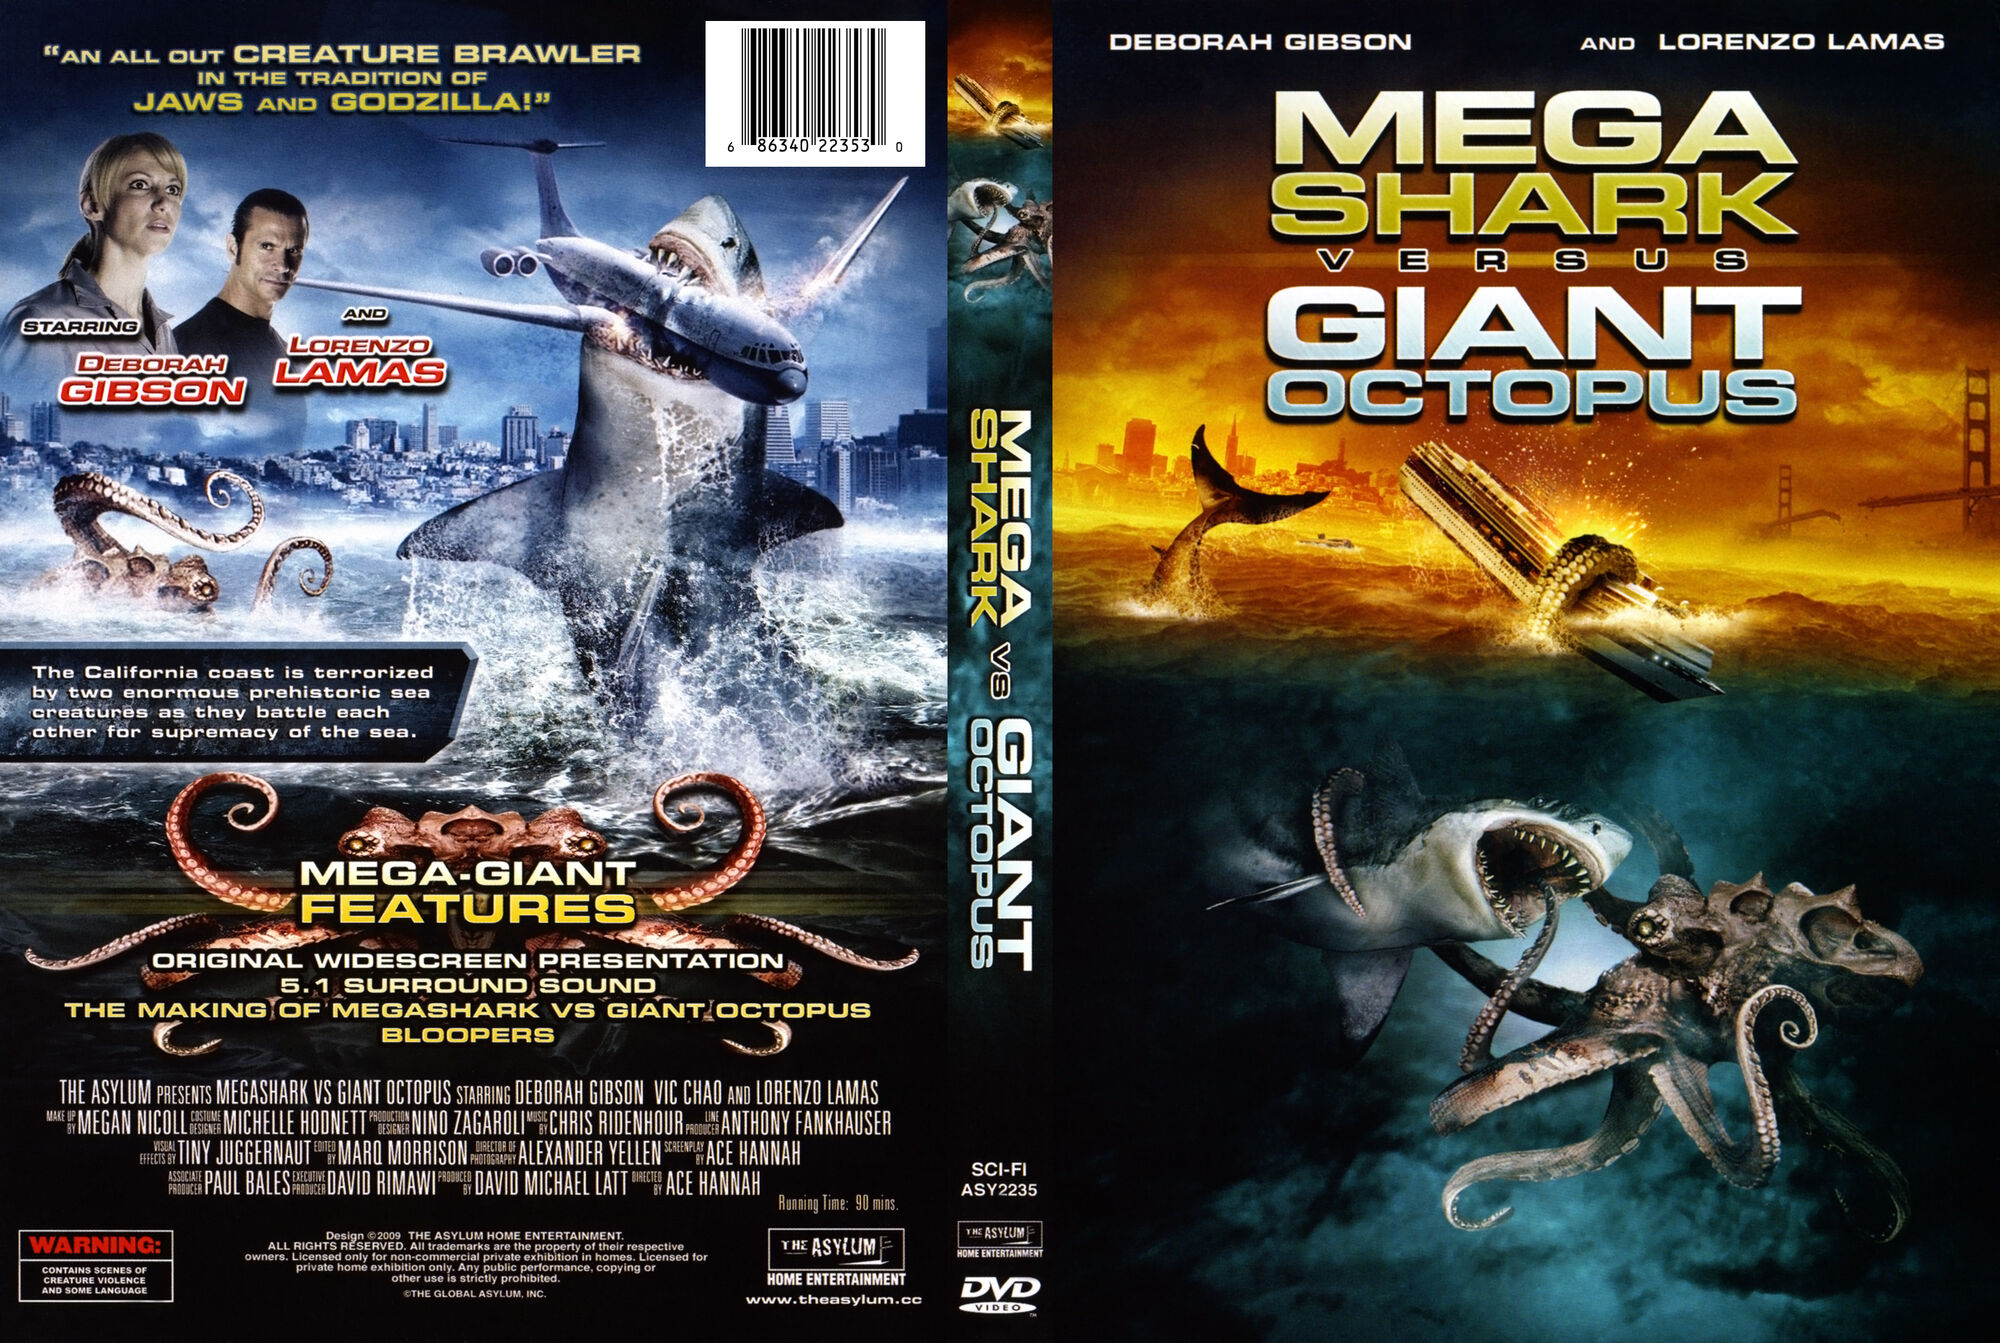 Mega Shark Versus Giant Octopus				Fan Feed